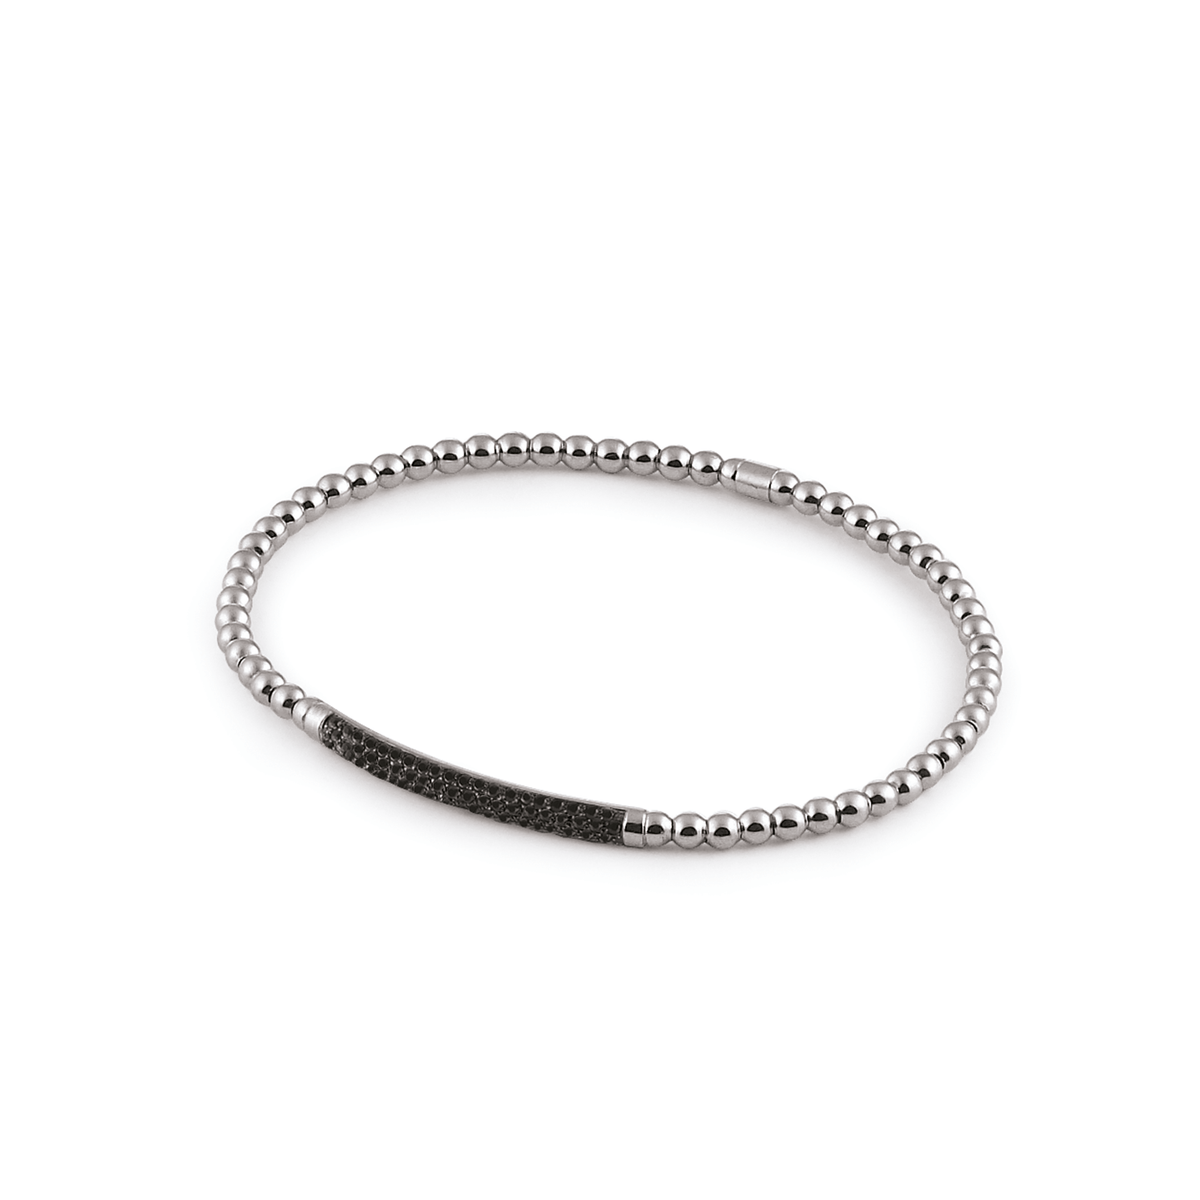 Al Coro Stretchy Bracelet in 18k White Gold with Black Sapphires - Orsini Jewellers NZ